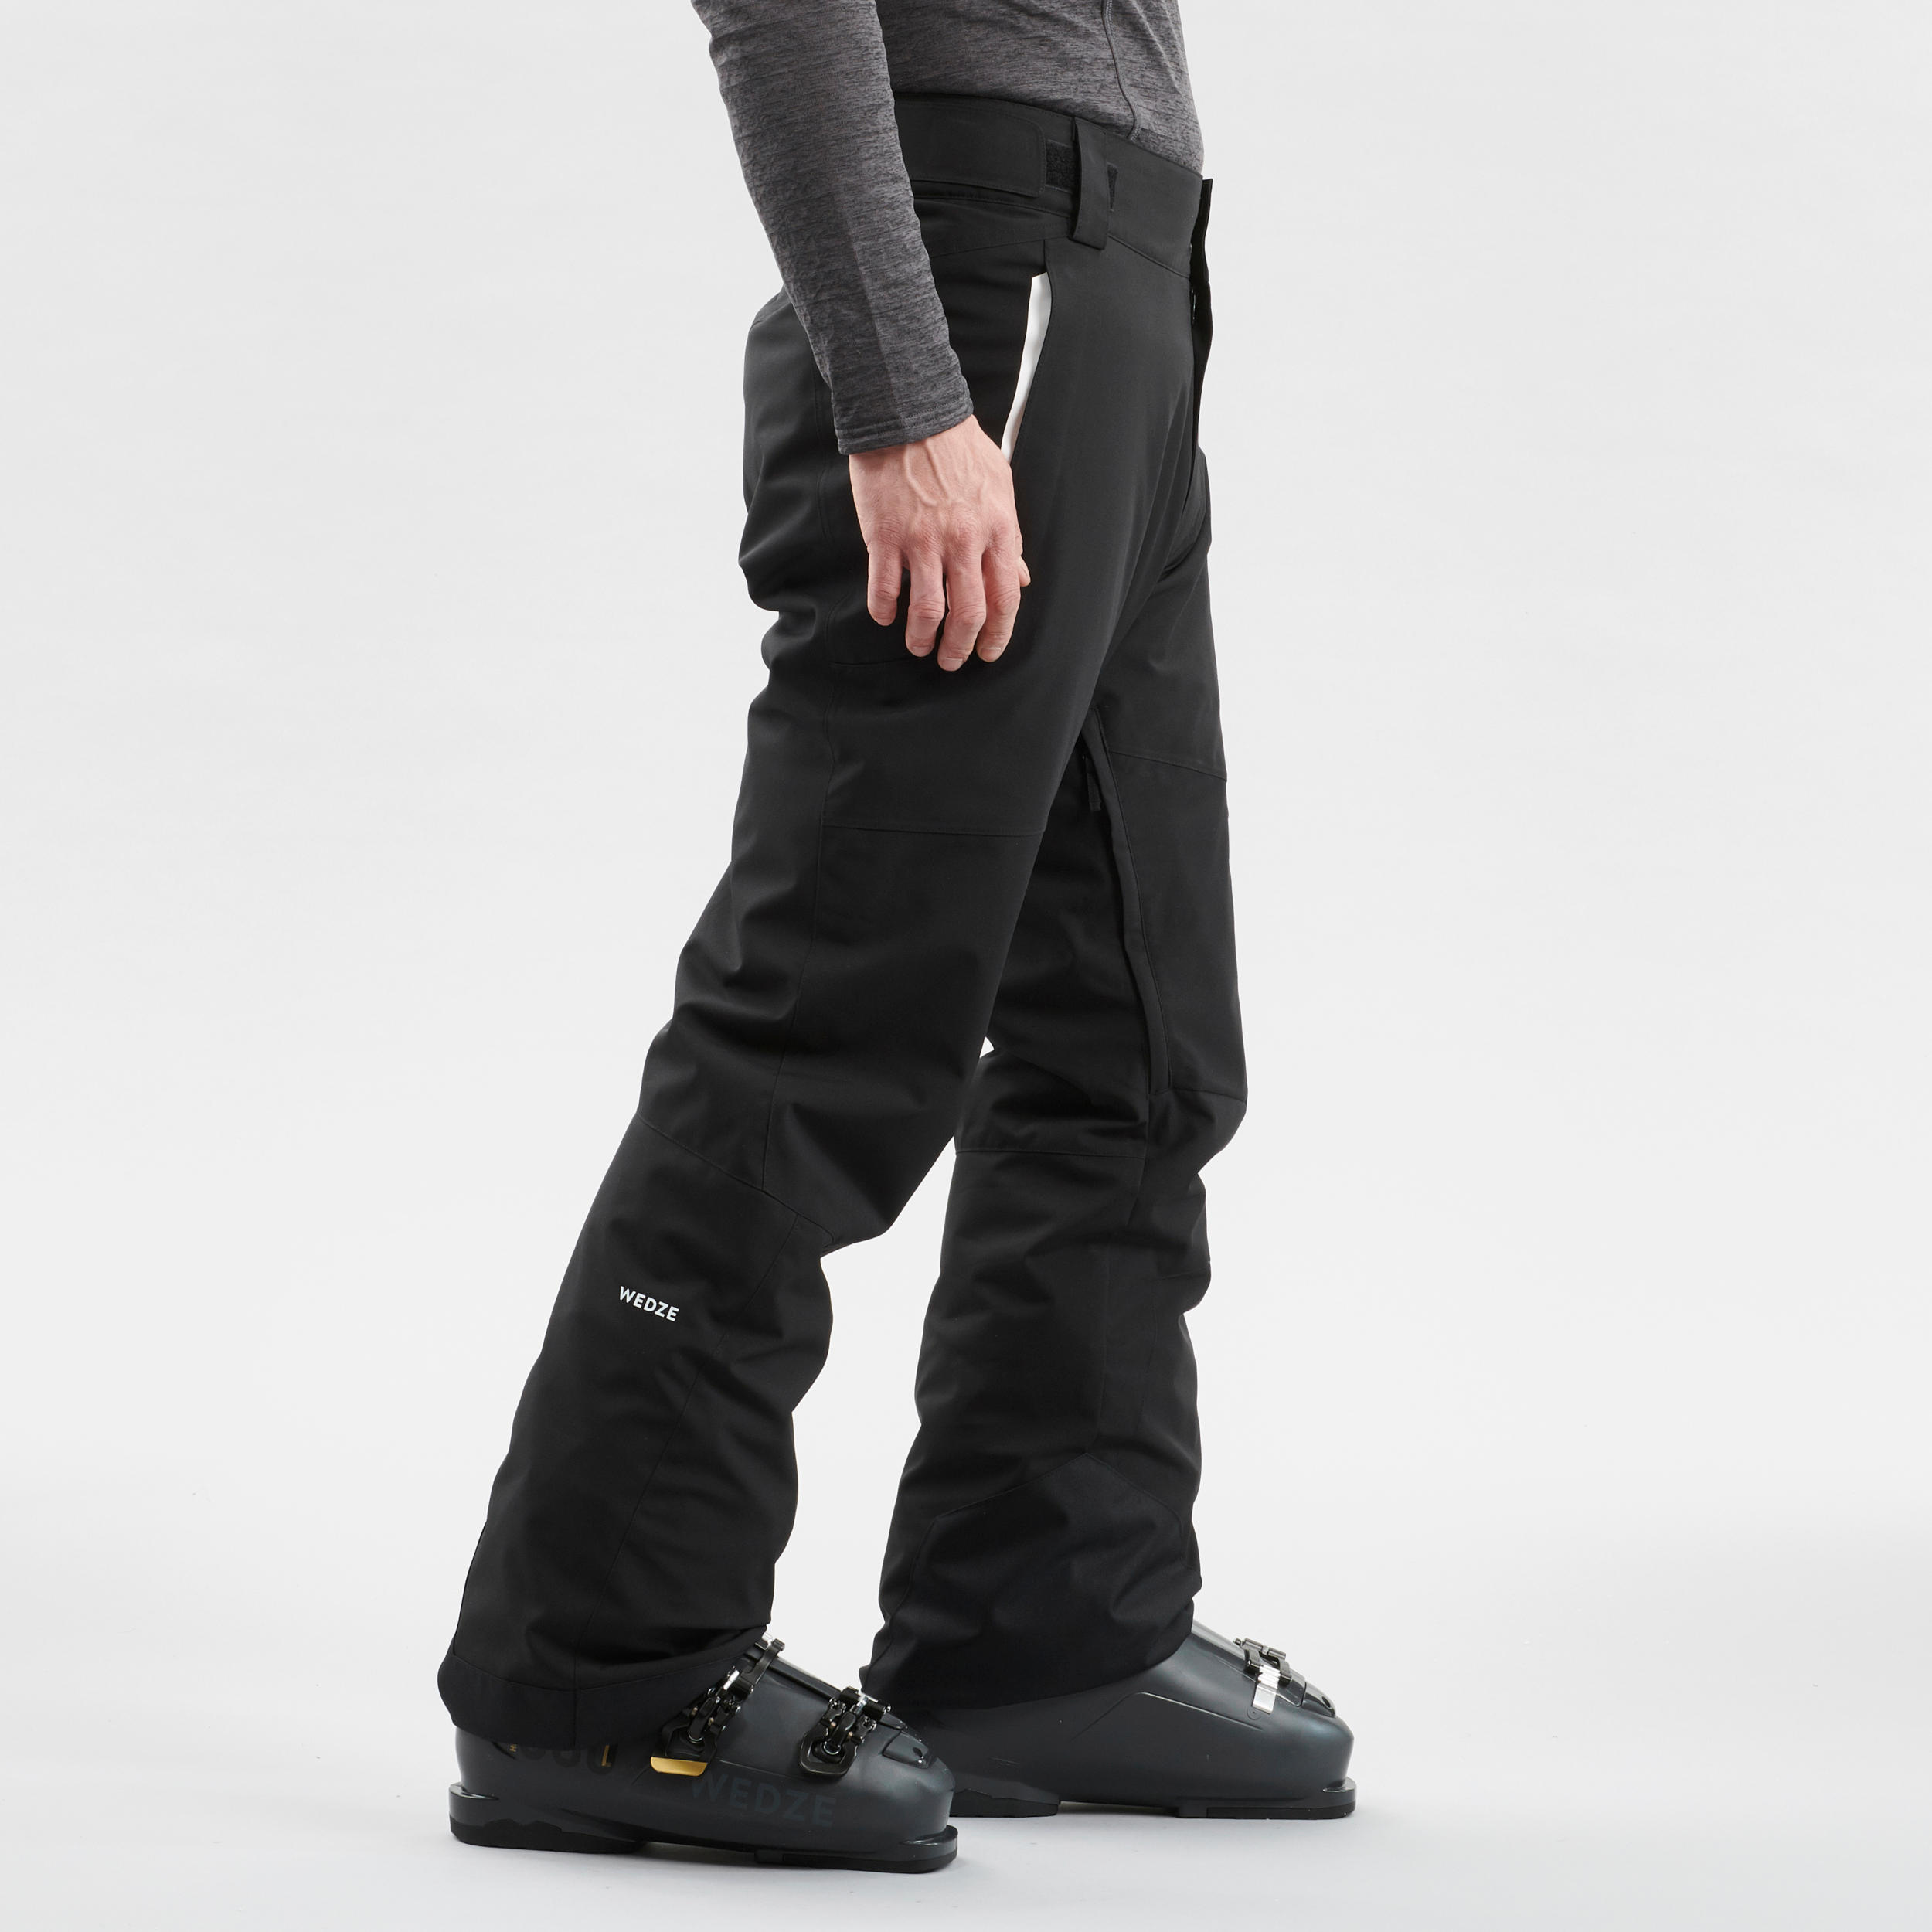 Quiksilver Estate PT ski trousers in black | ASOS